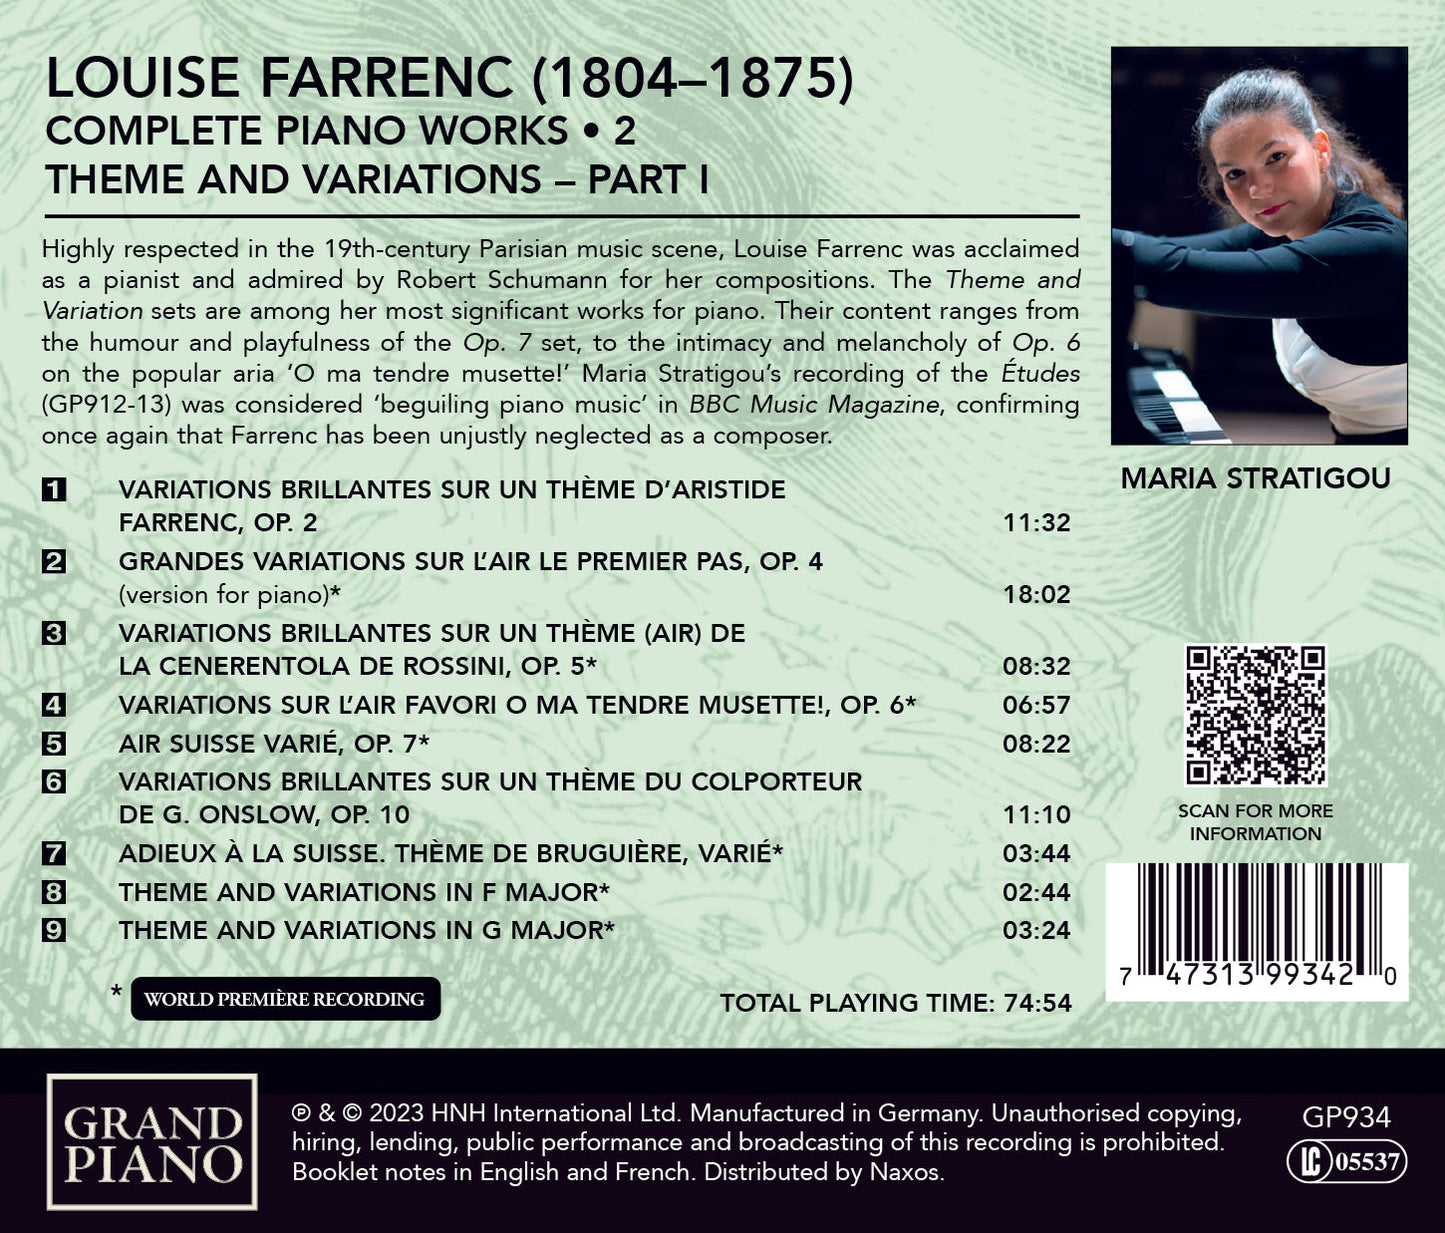 Farrenc: Complete Piano Works, Vol. 2 - Variations Brillante